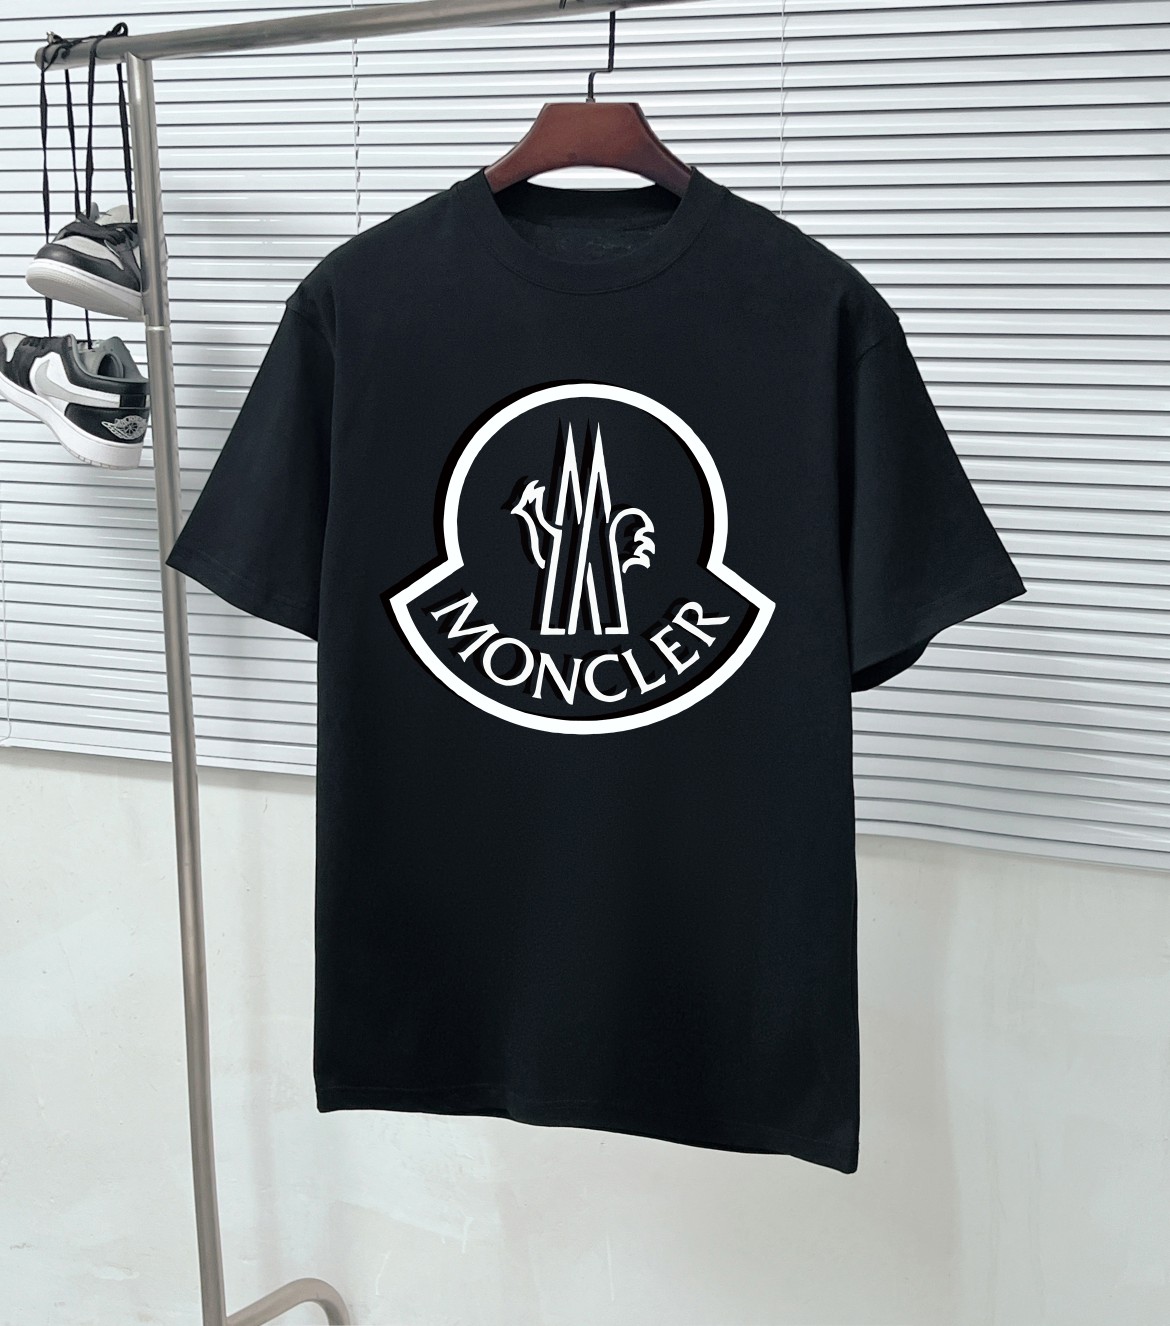 Wholesale China
 Moncler Clothing T-Shirt Black White Printing Unisex Cotton Spring/Summer Collection Fashion Short Sleeve